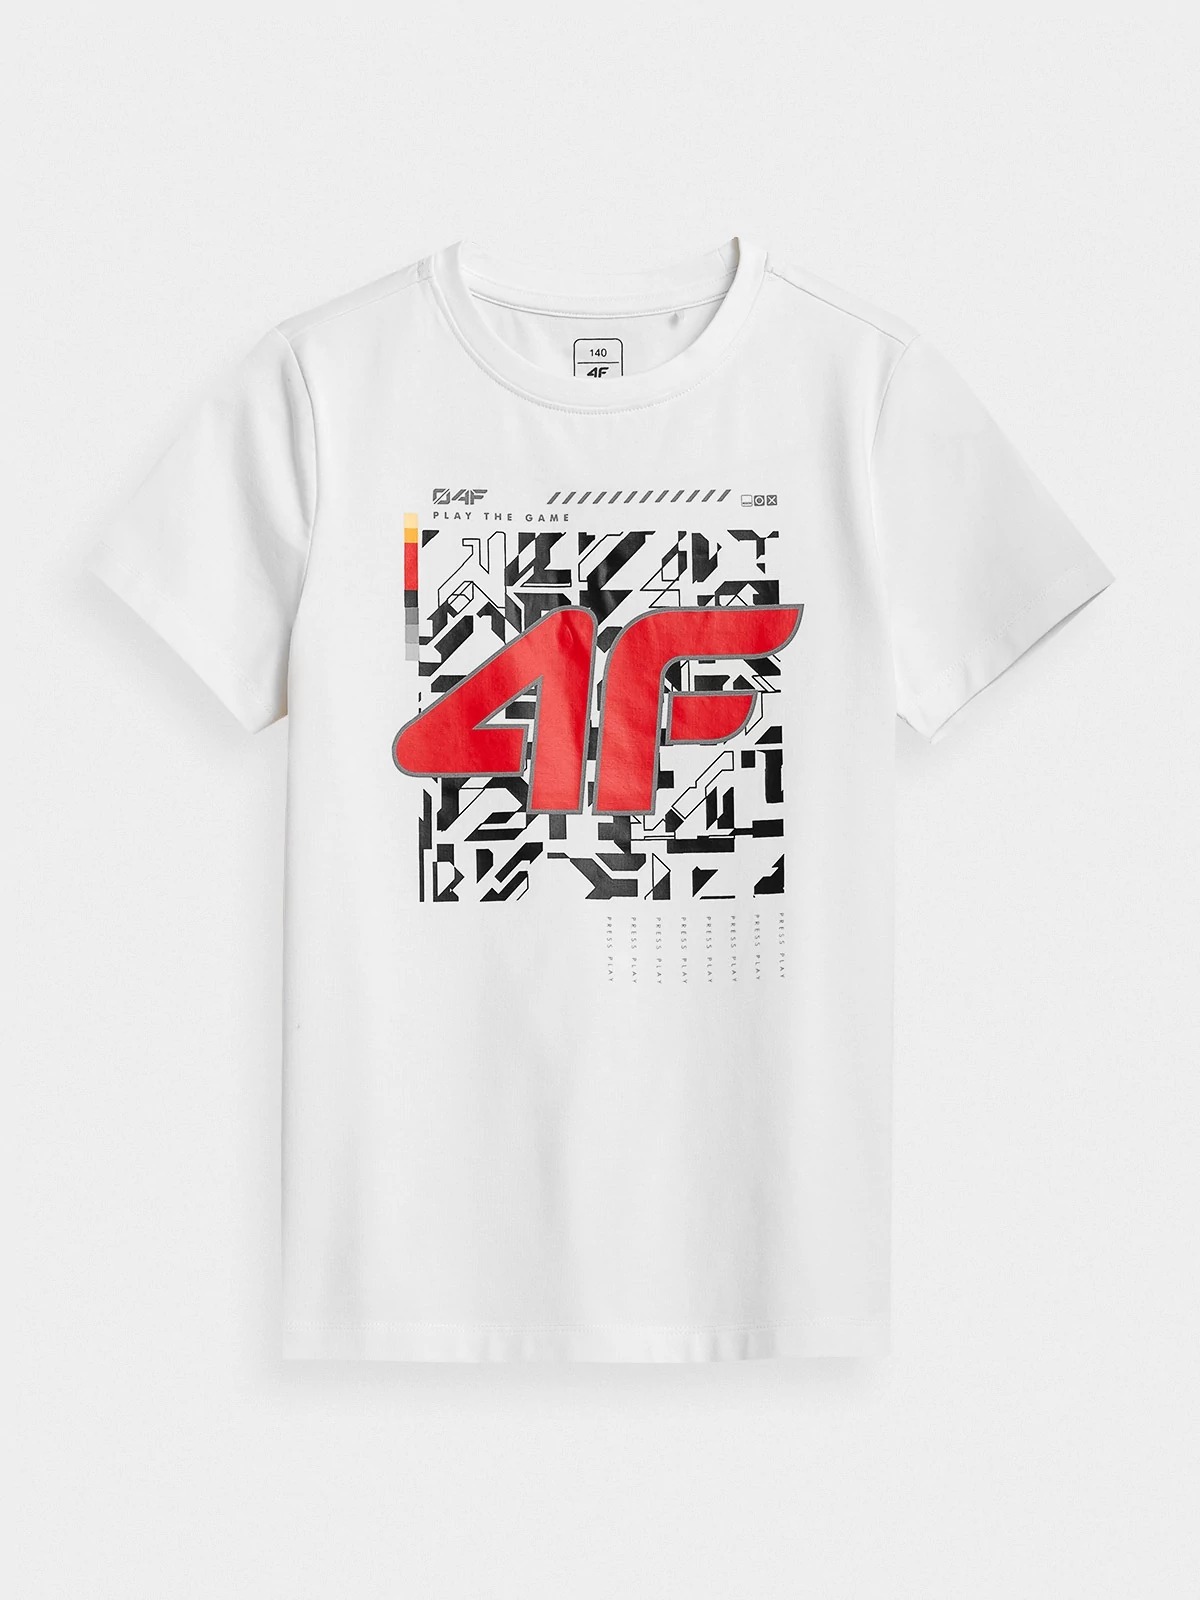 фото Футболка 4f boy's t-shirts hjz21-jtsm008-10s цв.белый р. 128